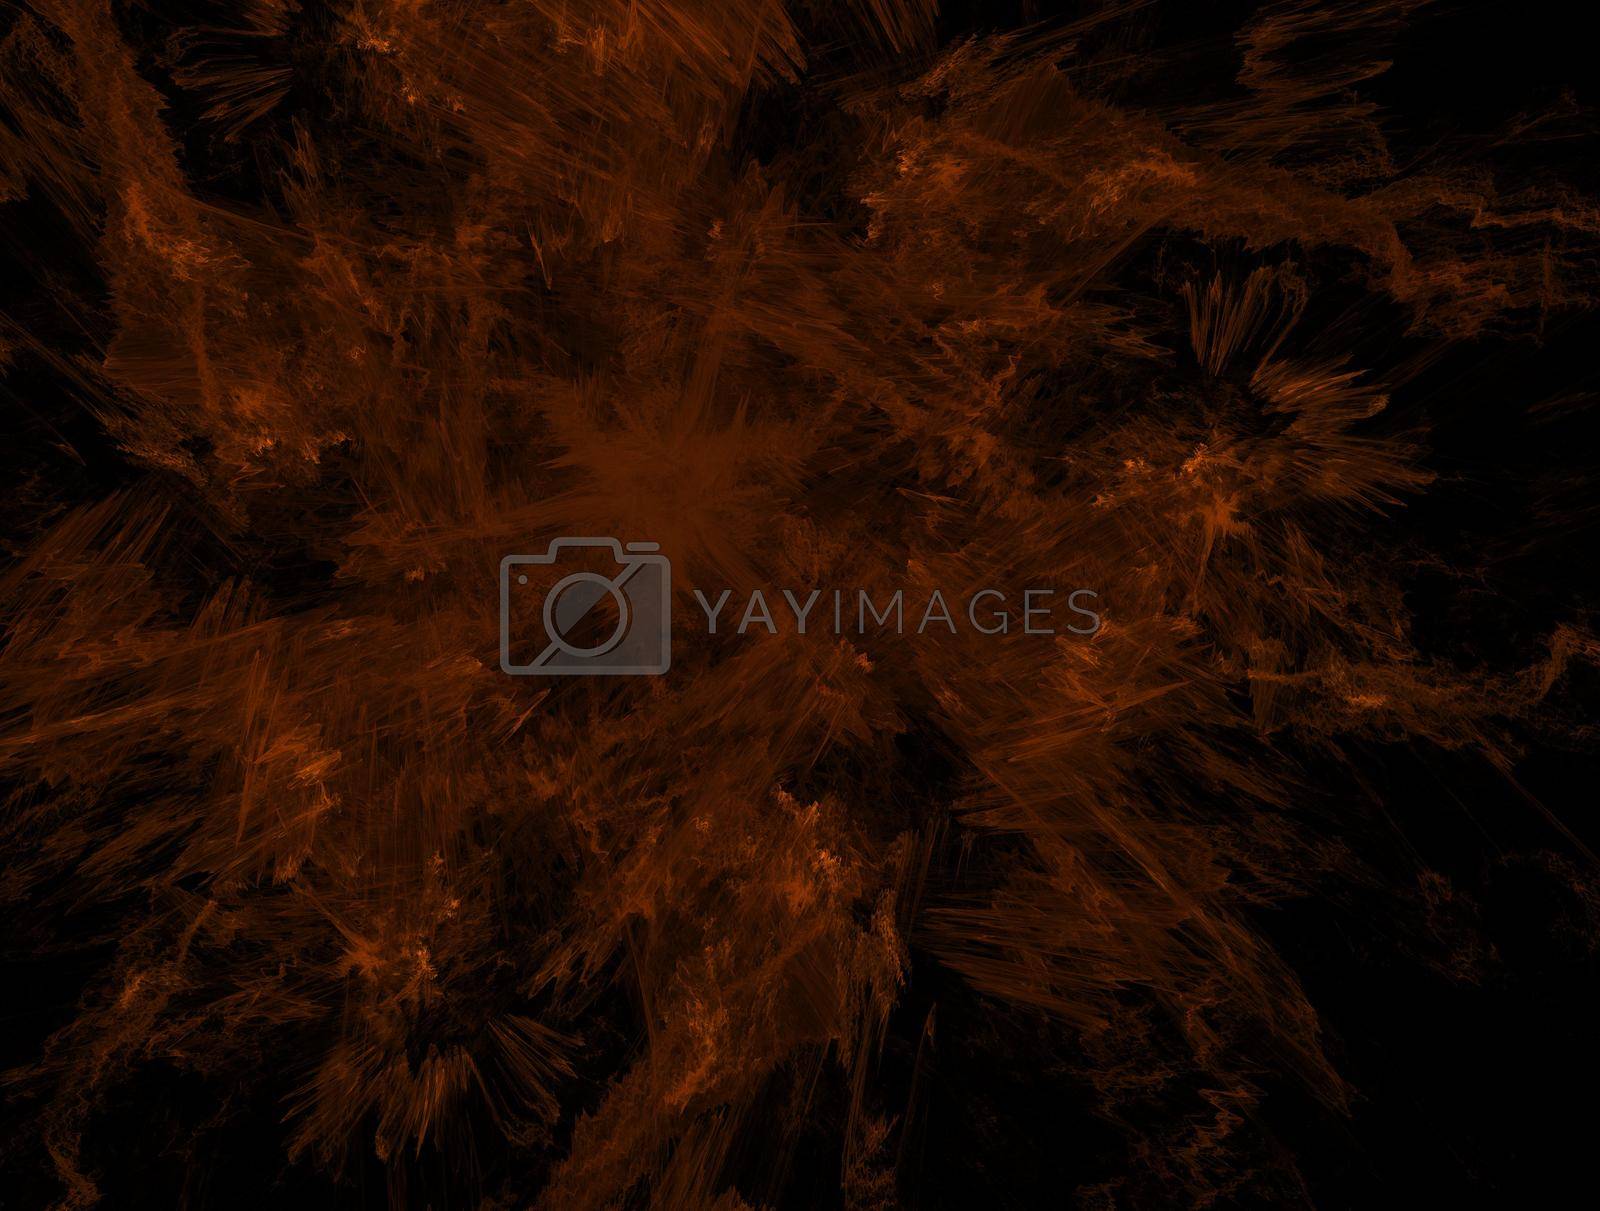 Royalty free image of Imaginatory fractal abstract background Image by nikitabuida